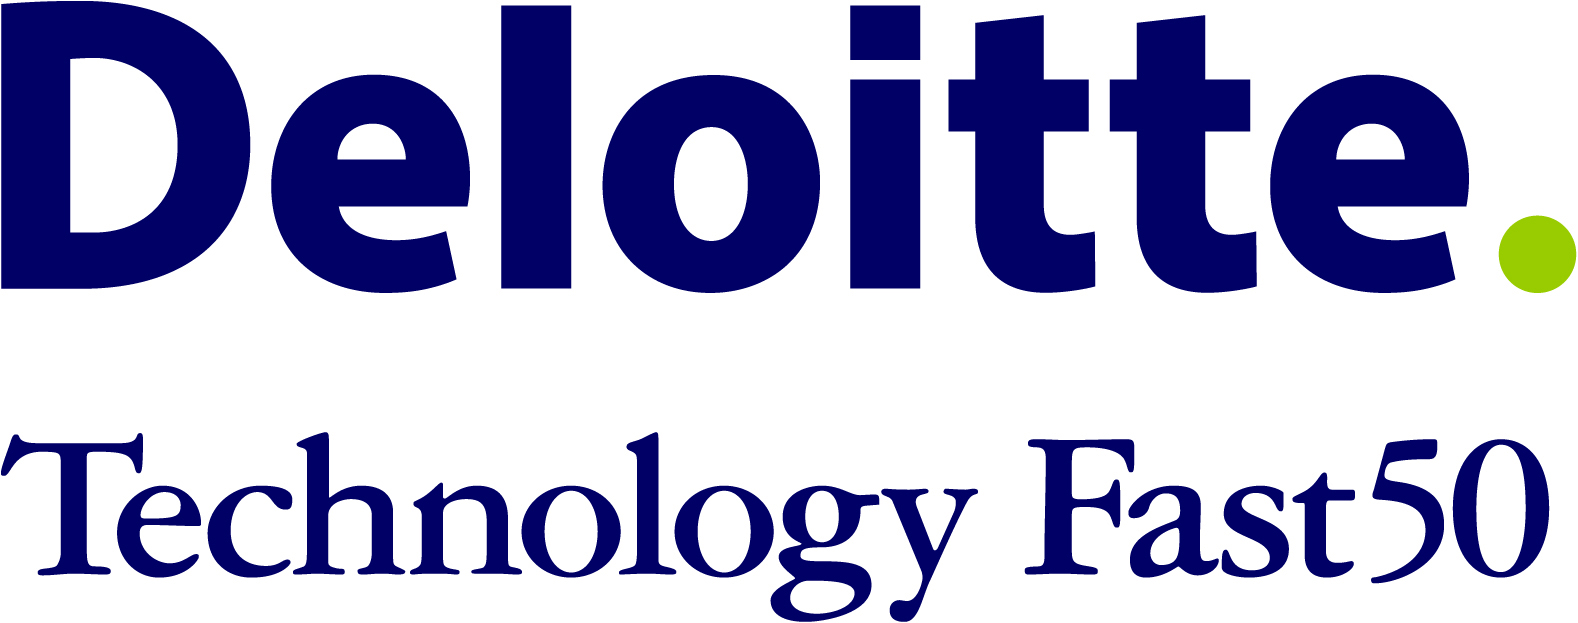 Deloitte – professional services network